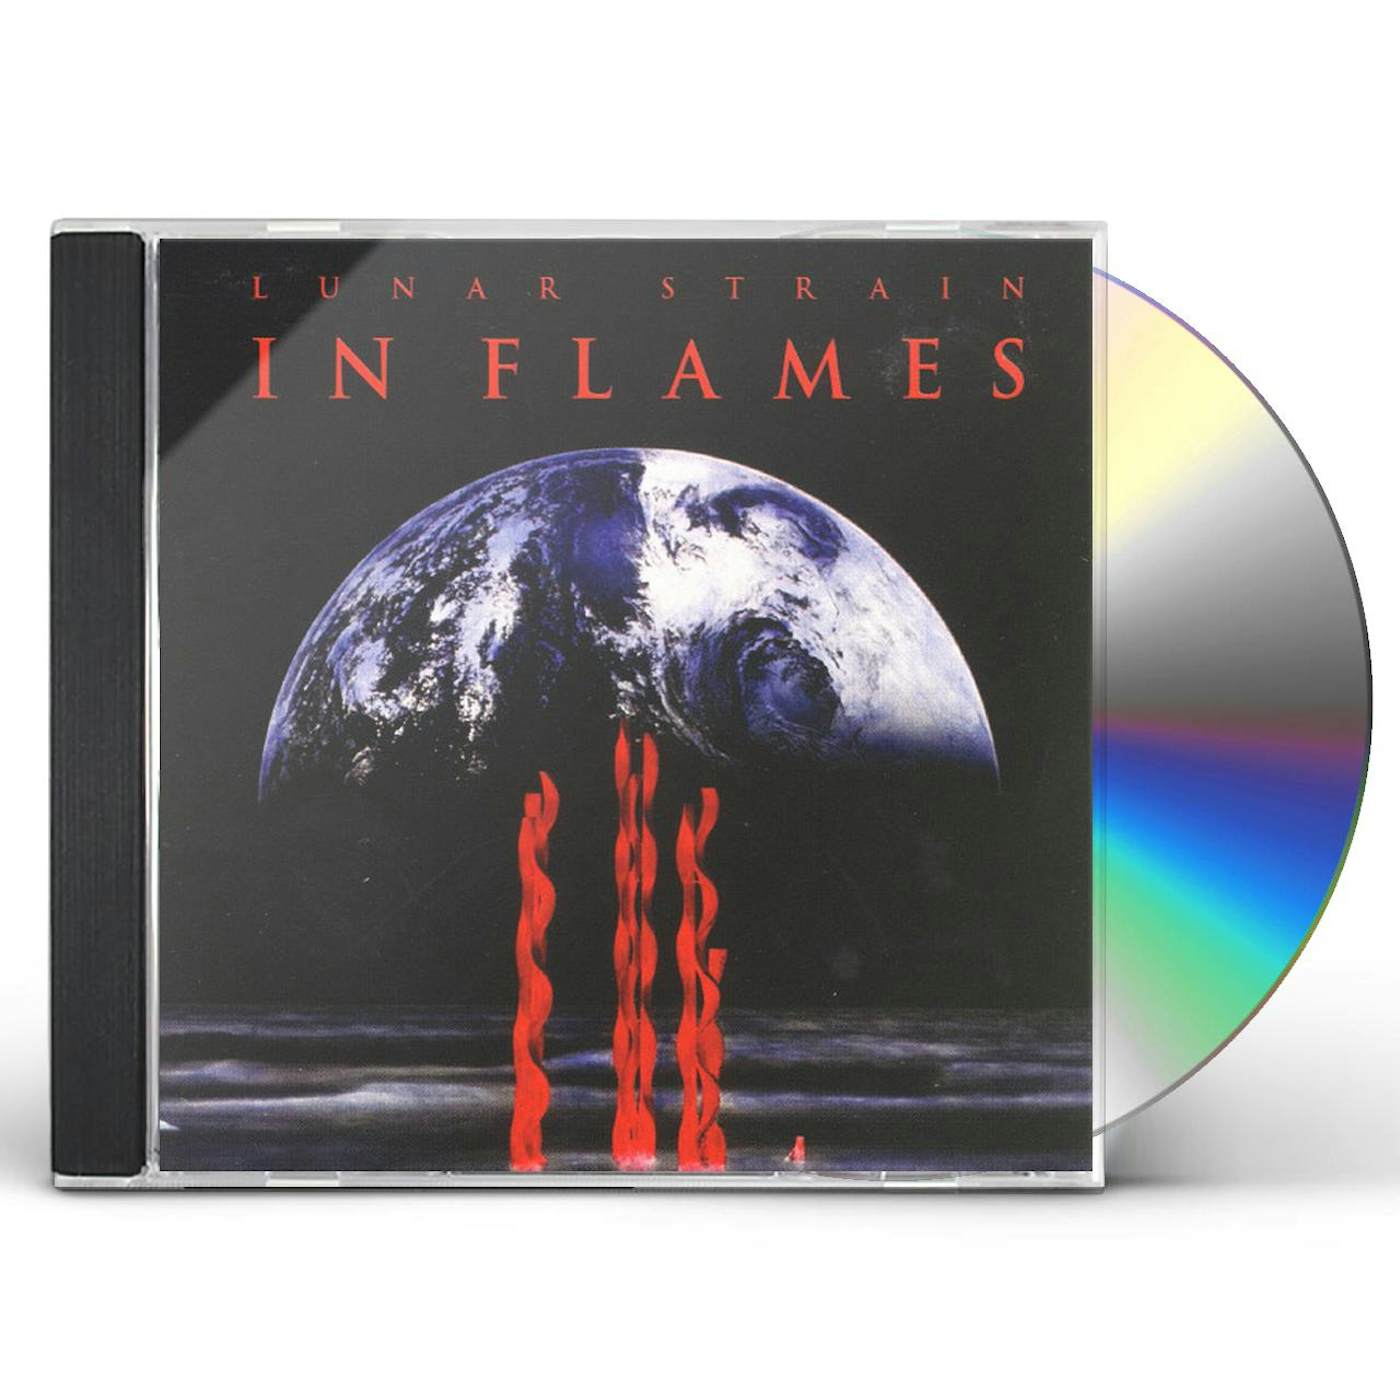 In Flames LUNAR STRAIN CD